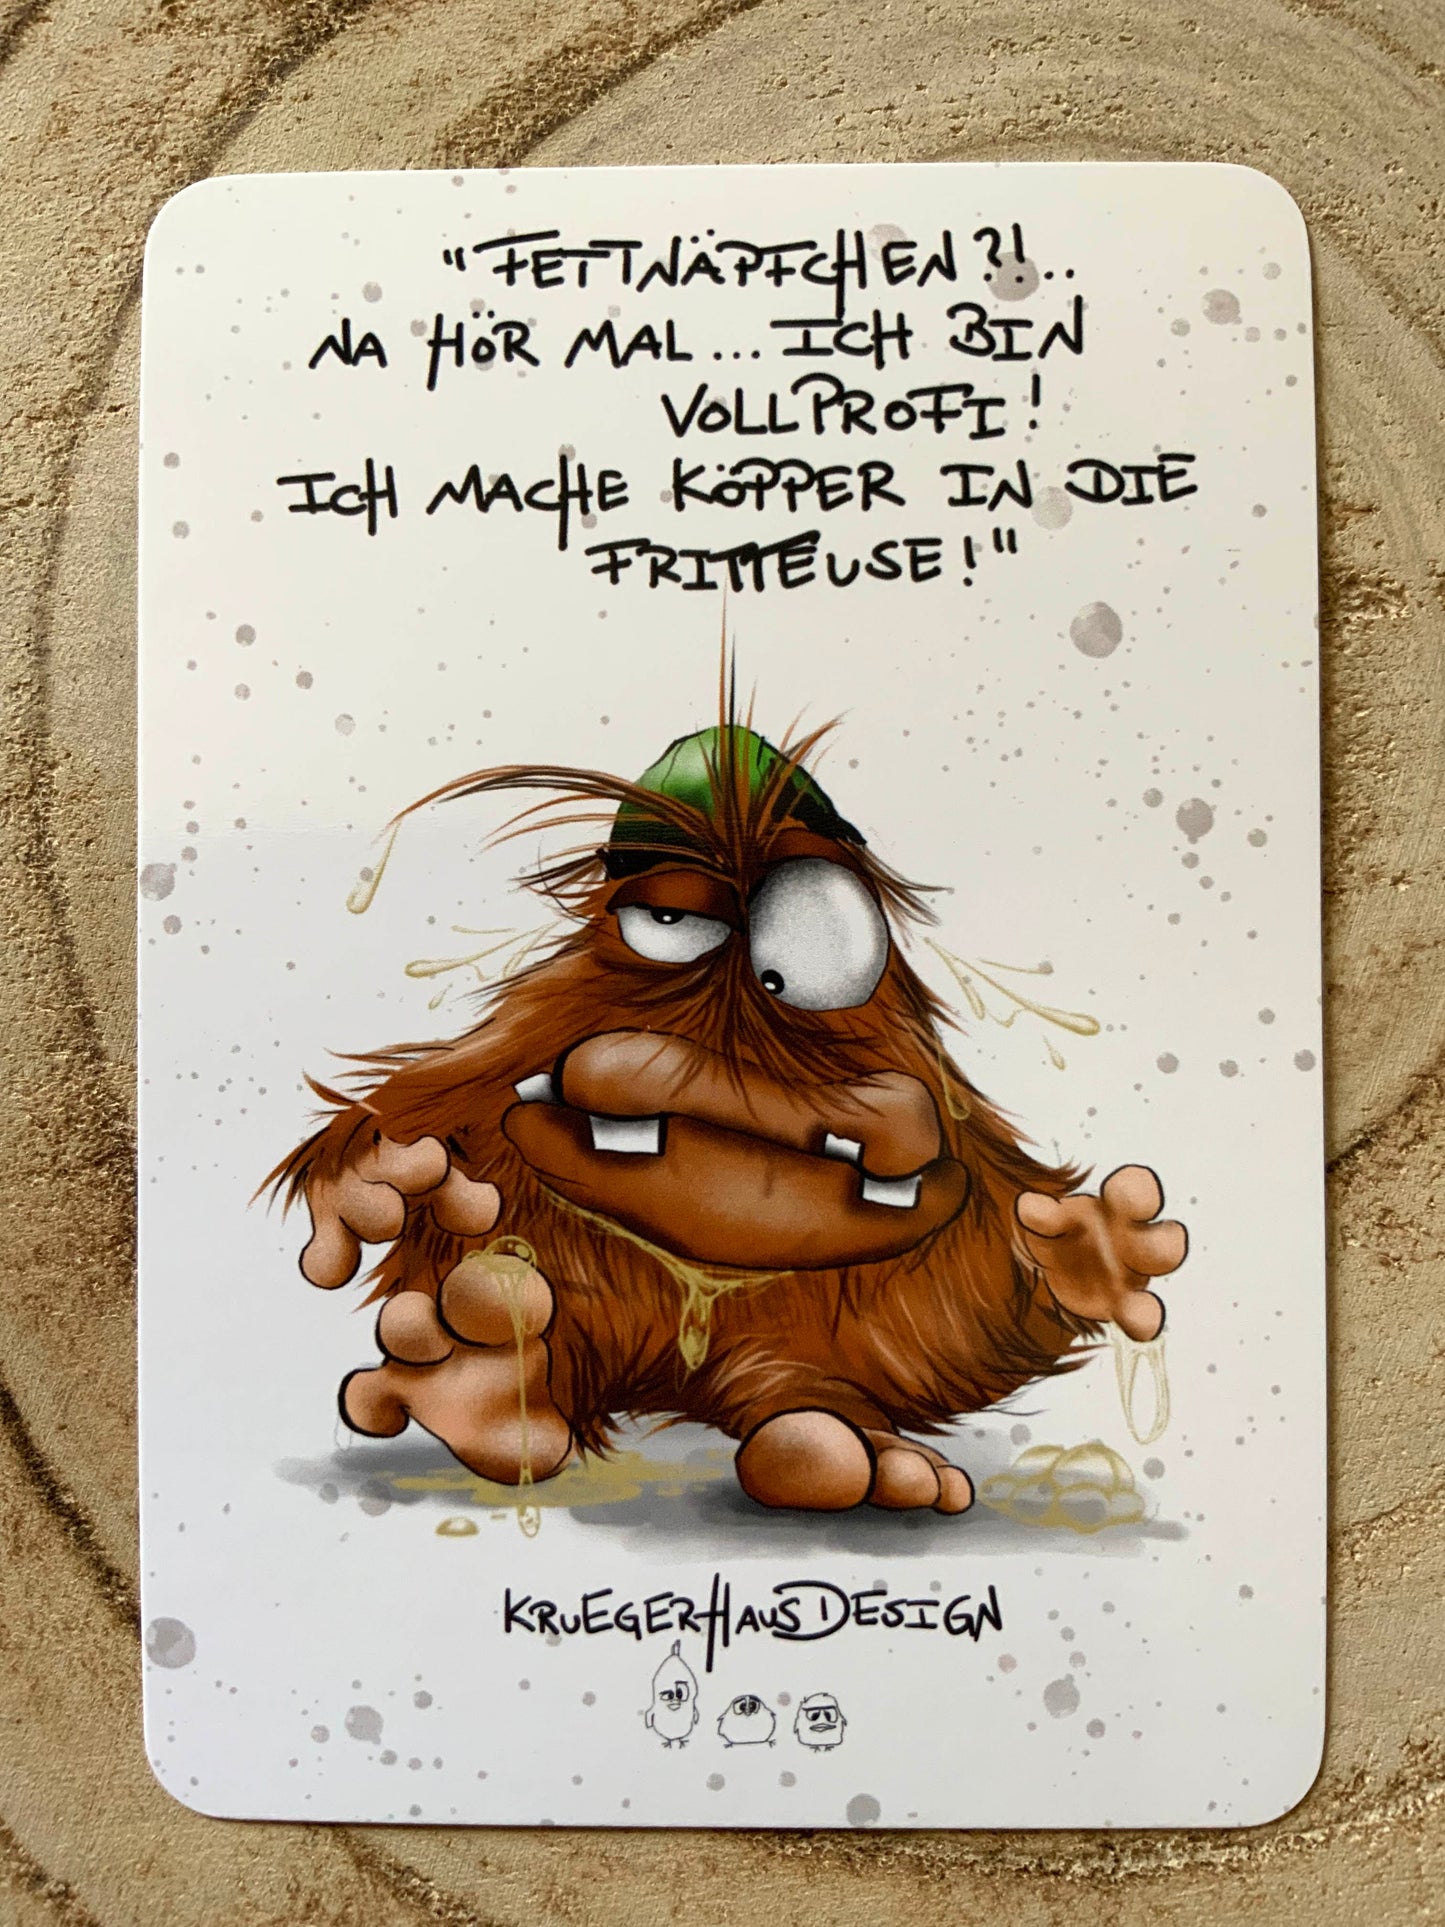 Postkarte Monster Kruegerhausdesign  "Fettnäpfchen?! Na Hör mal, ich bin vollprofi..."